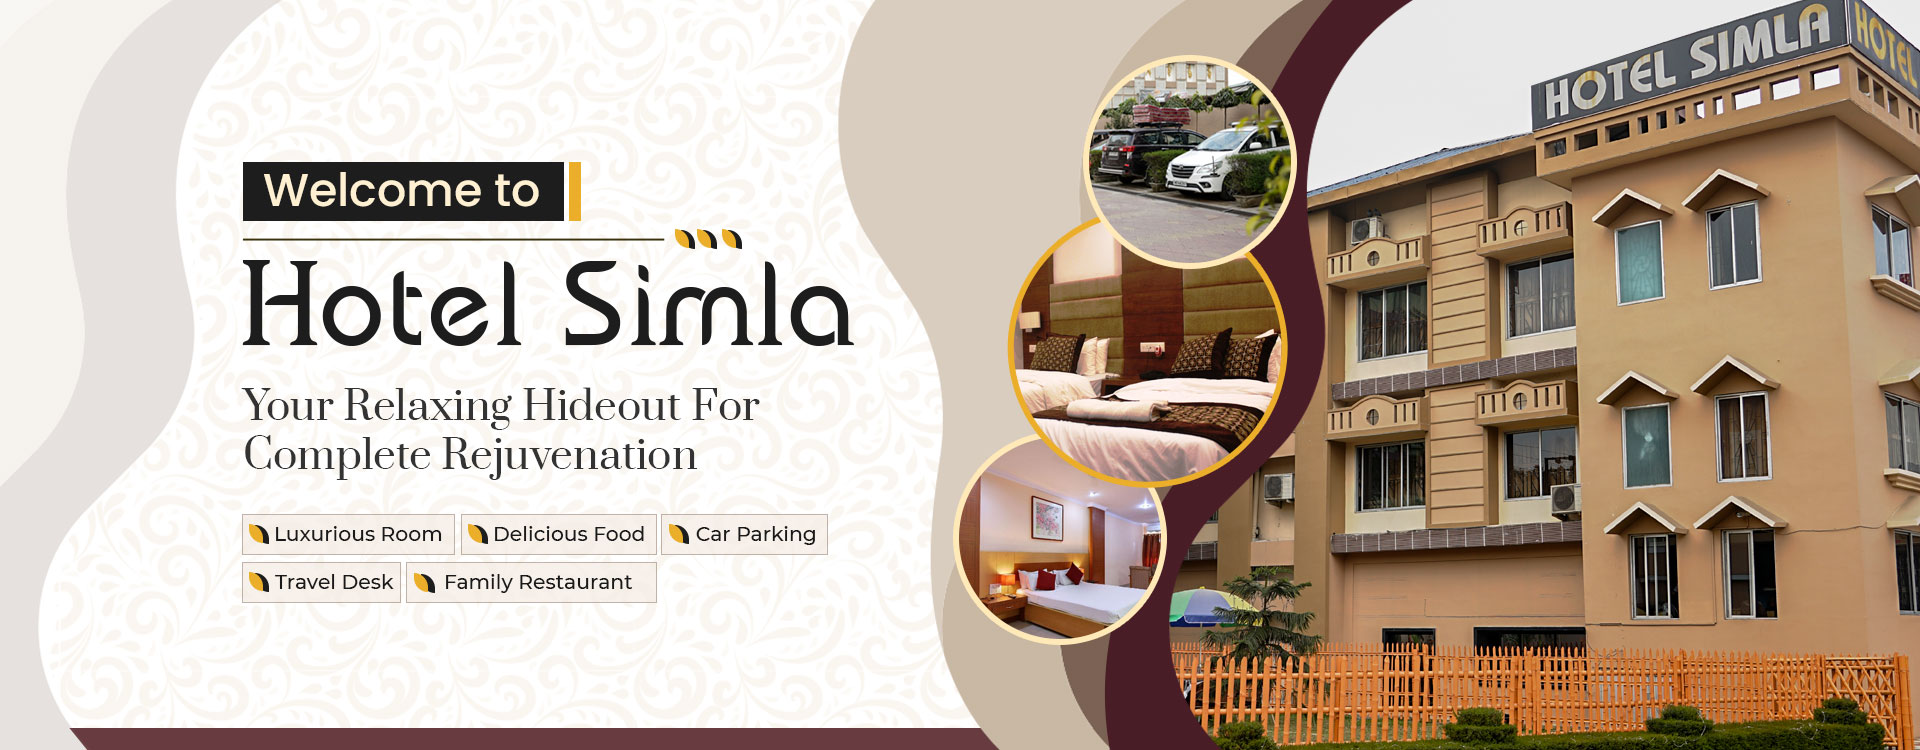 Hotel Simla